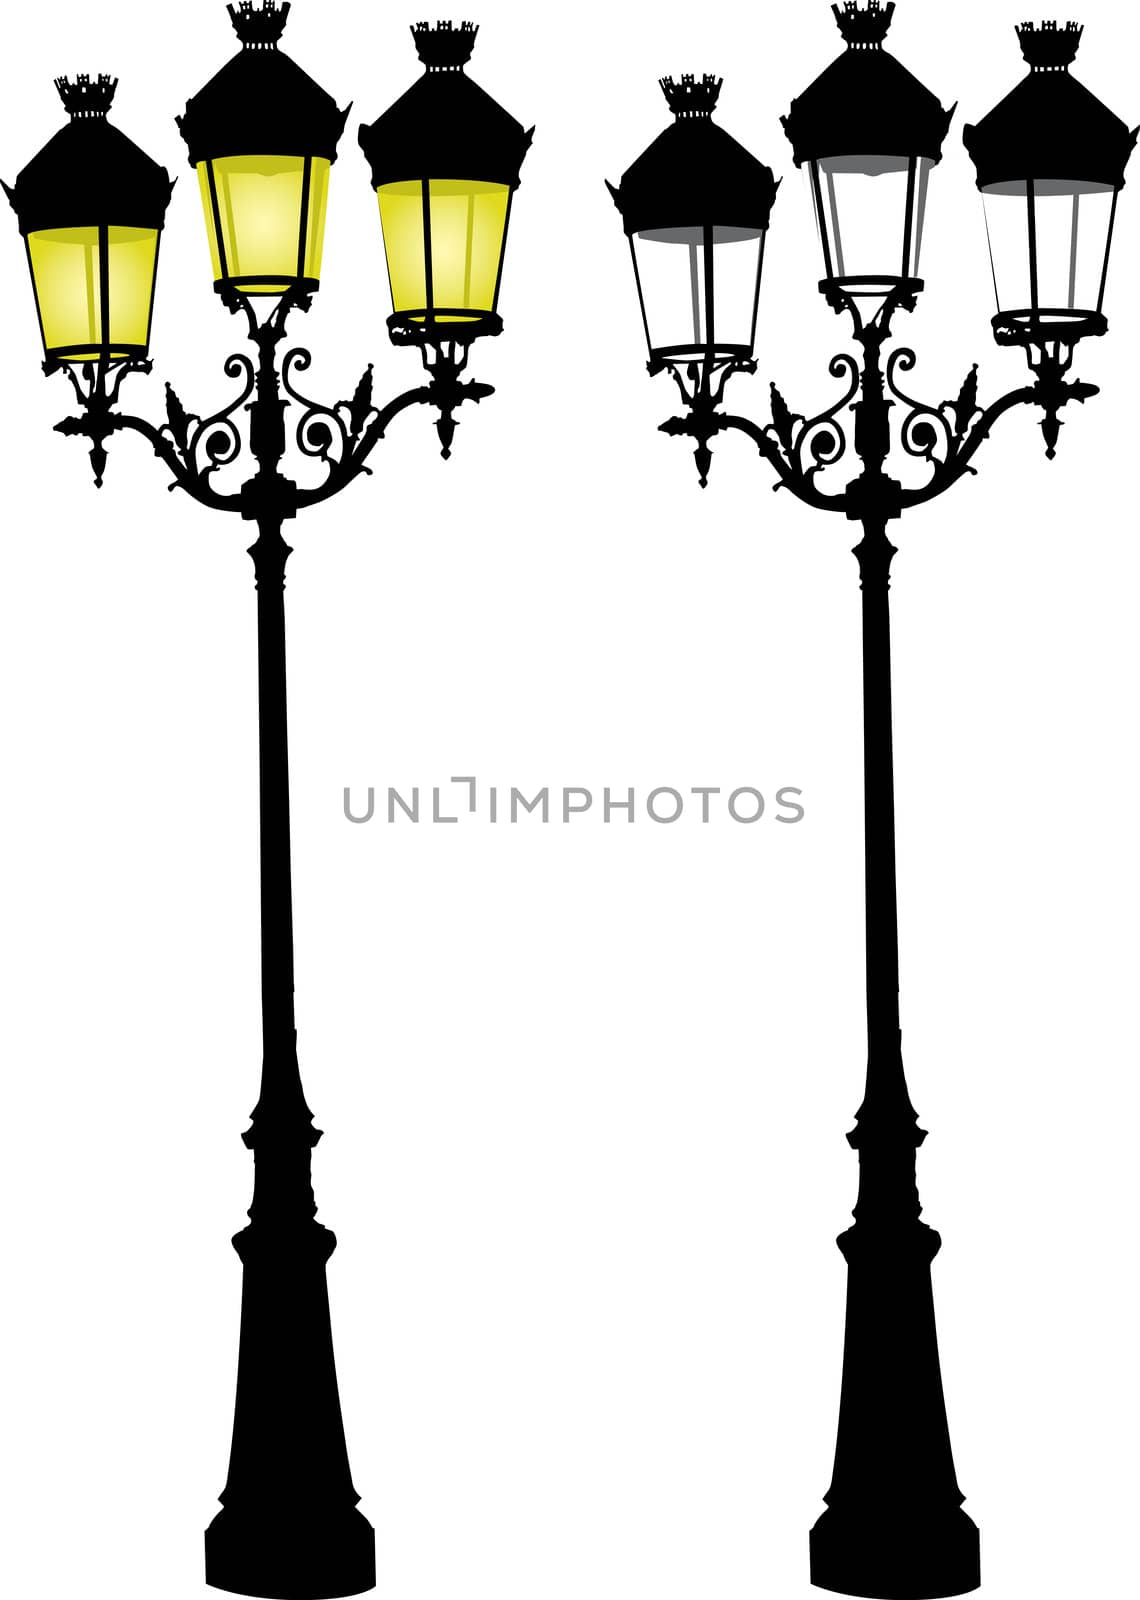 Illustration of Glowing retro street lamp